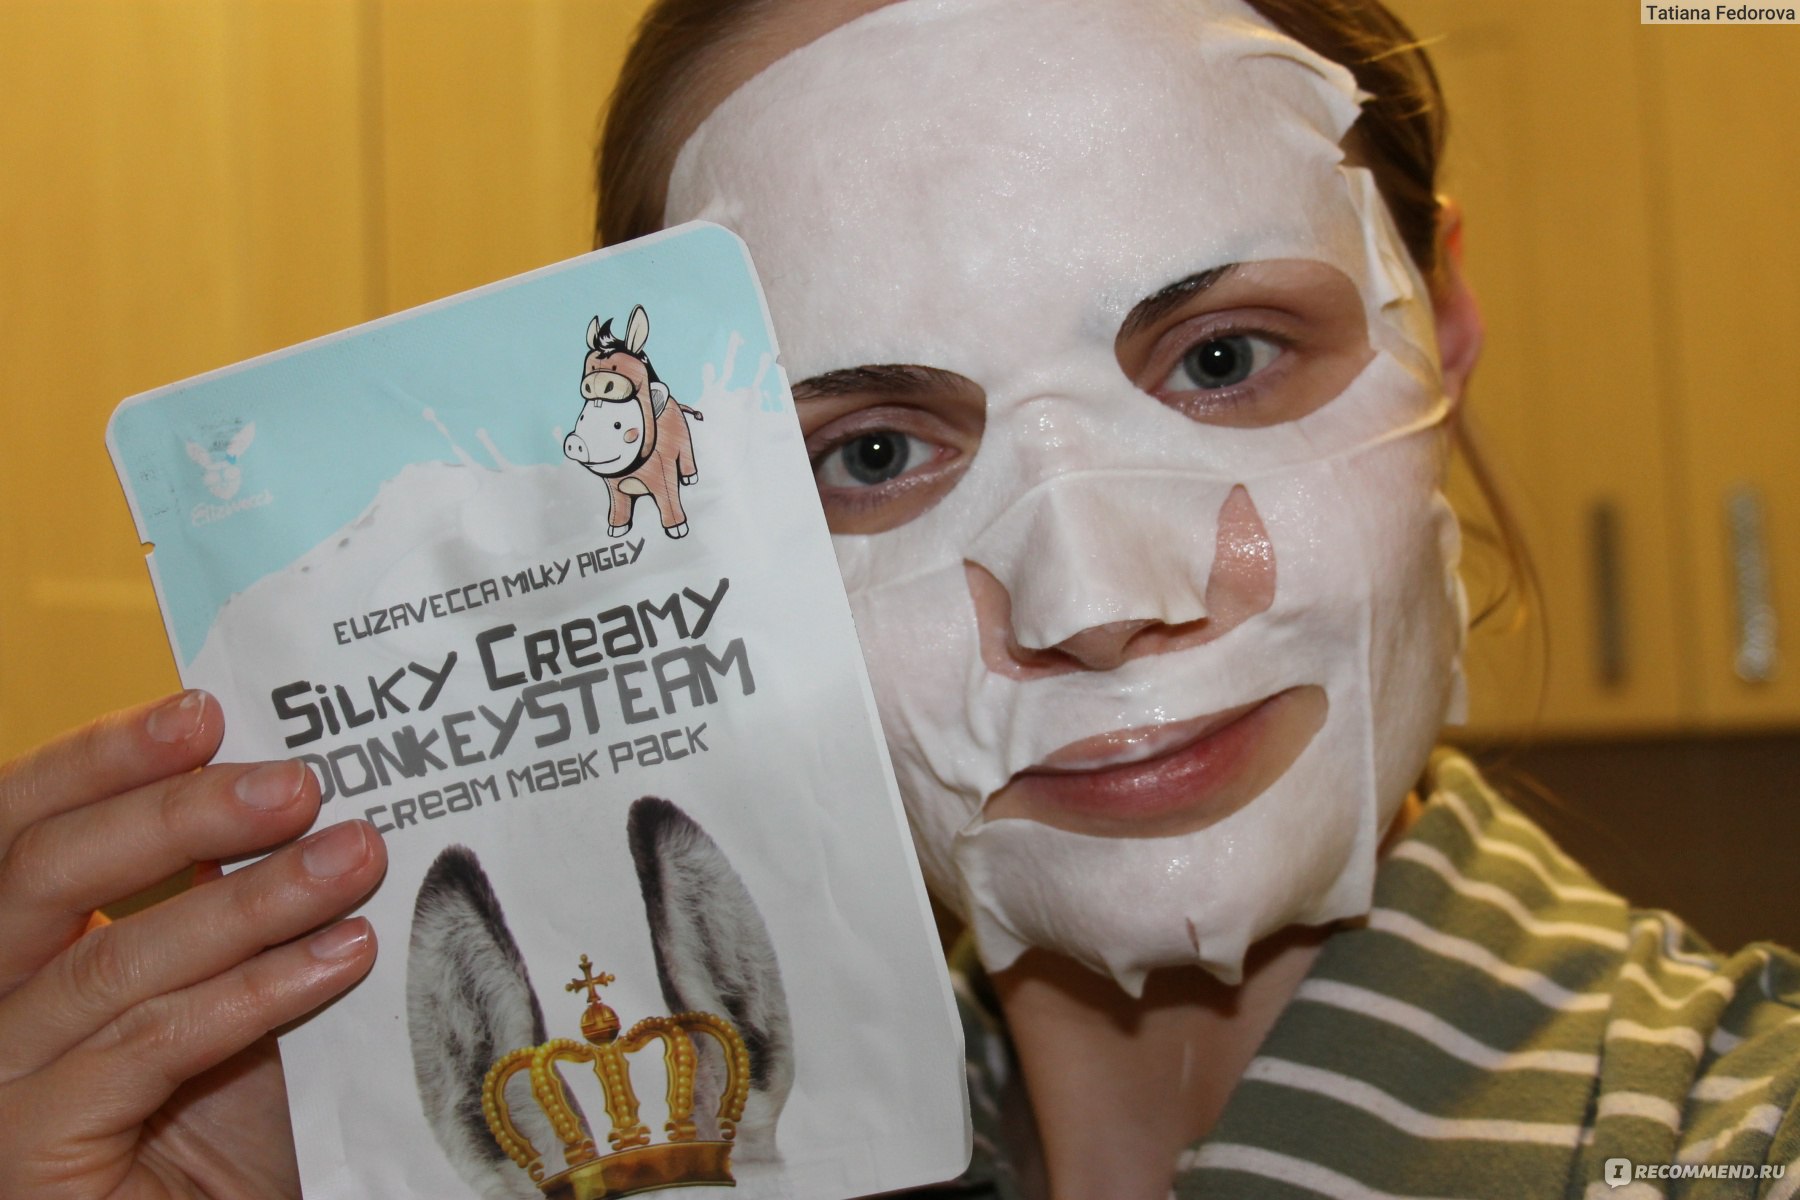 Silky creamy donkey steam cream mask pack фото 29